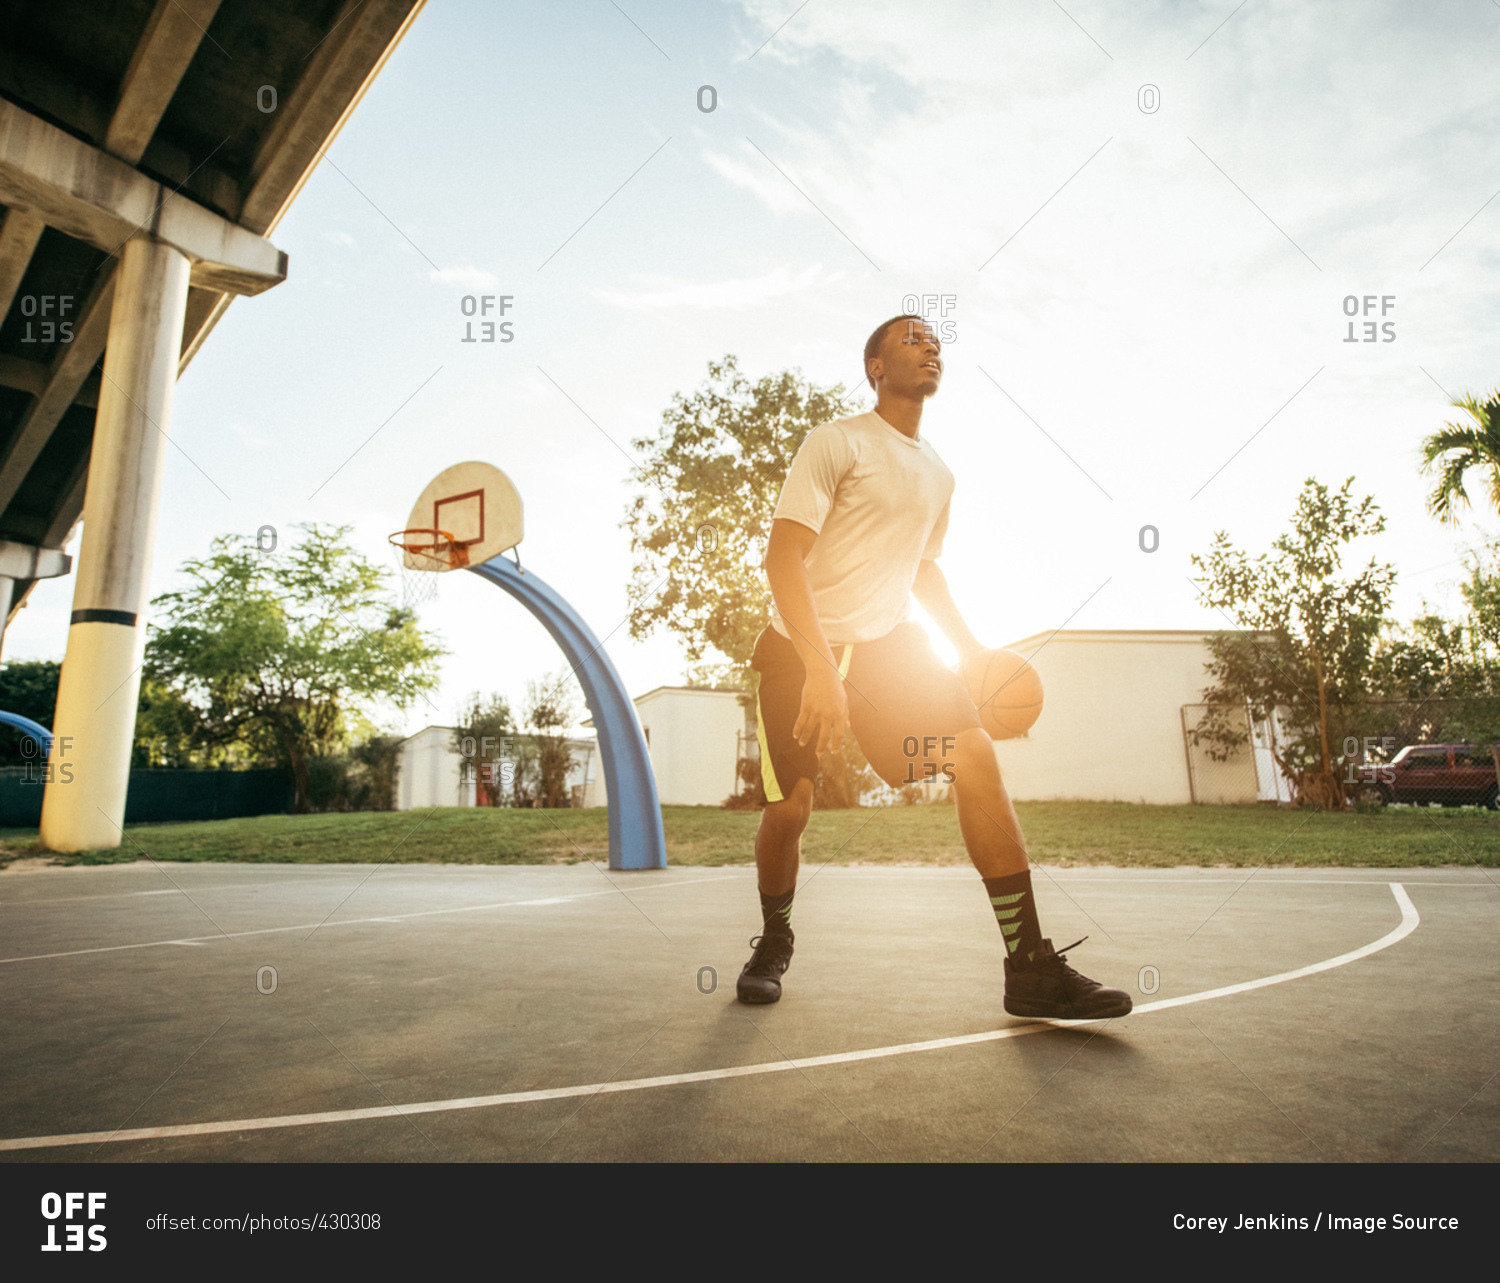 Men on basketball court holding basketball looking away